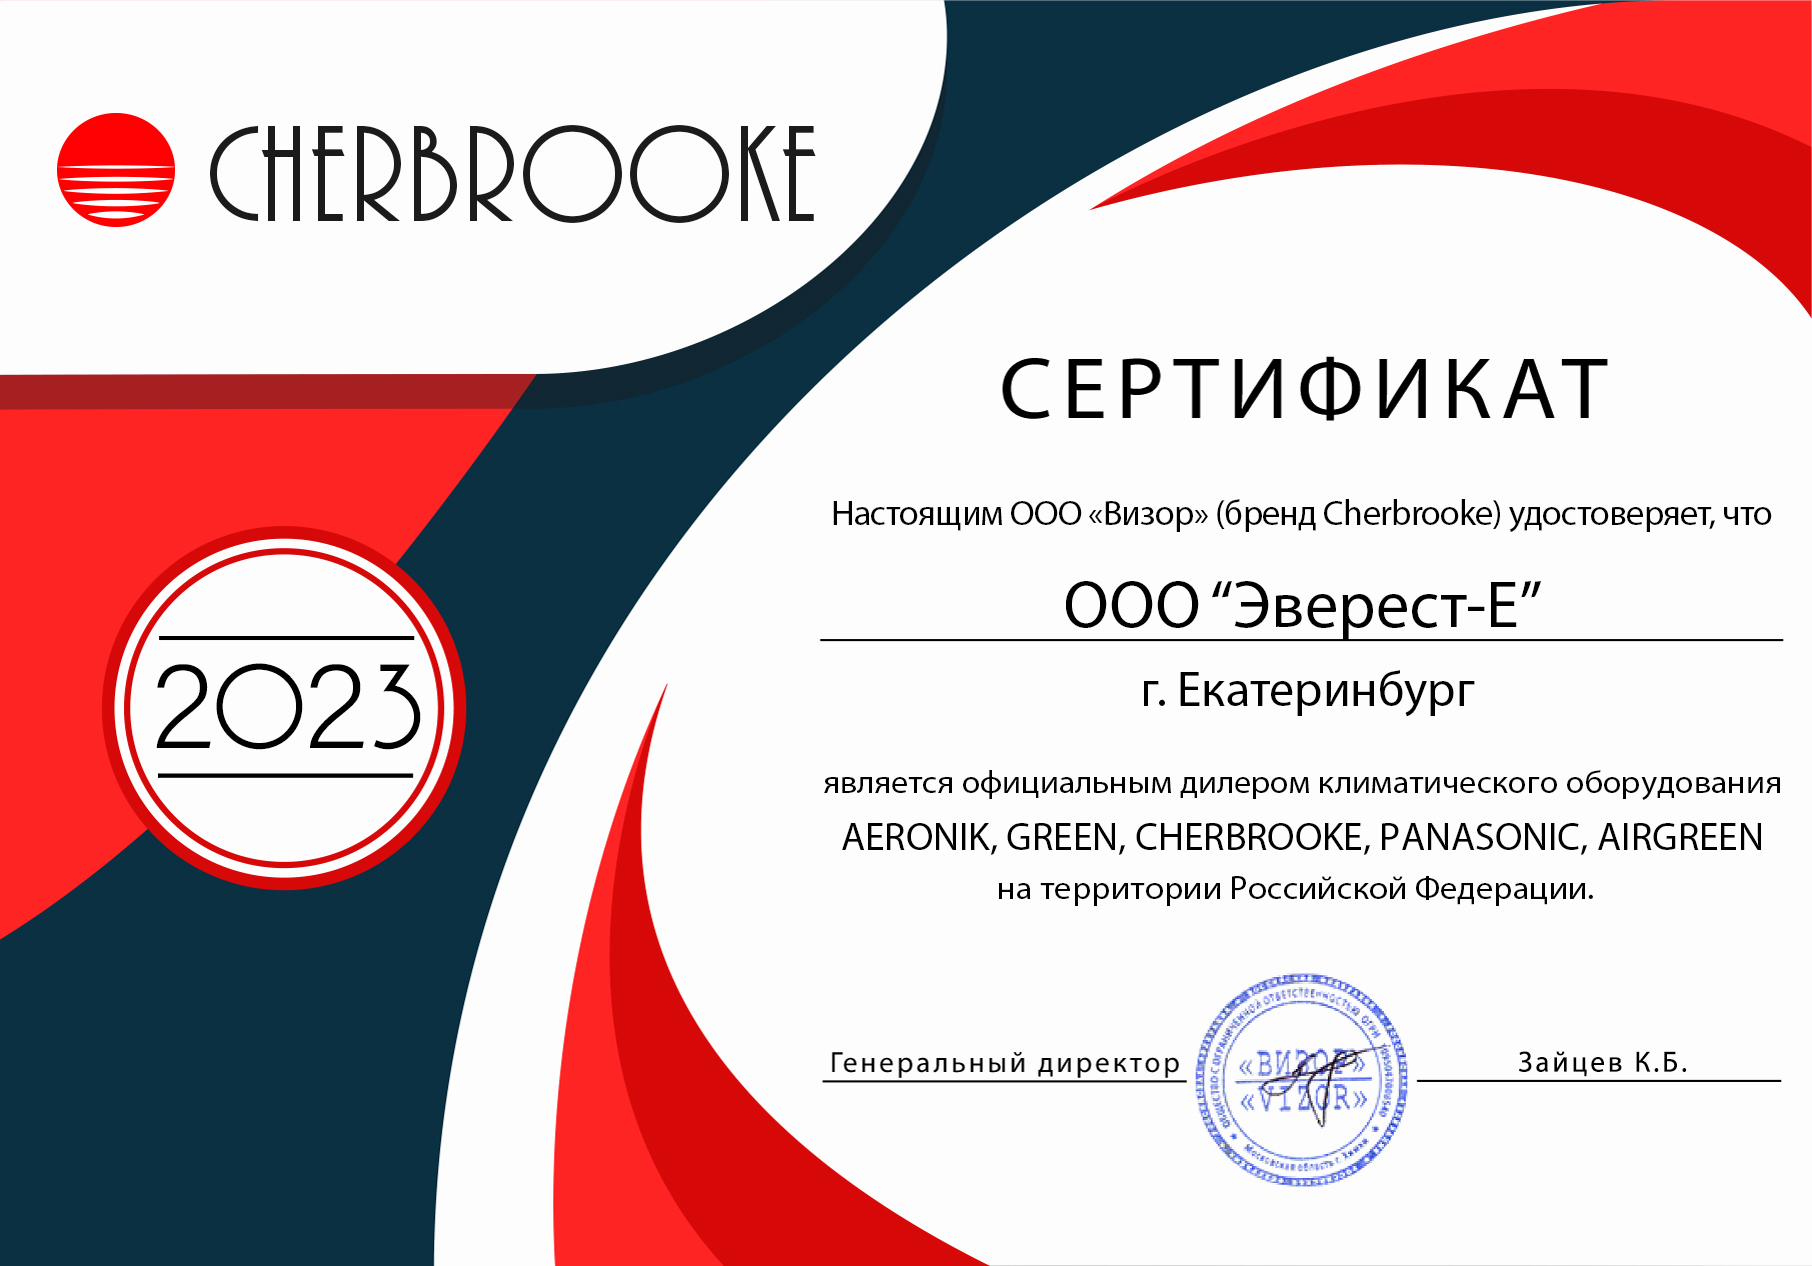 sert_cherbrooke-3 Kondicioner Panasonic CS-E7RKDW / CU-E7RKD kypit v Ekaterinbyrge v internet-magazine KlimatMarket96.ry Сертификат официального дилера